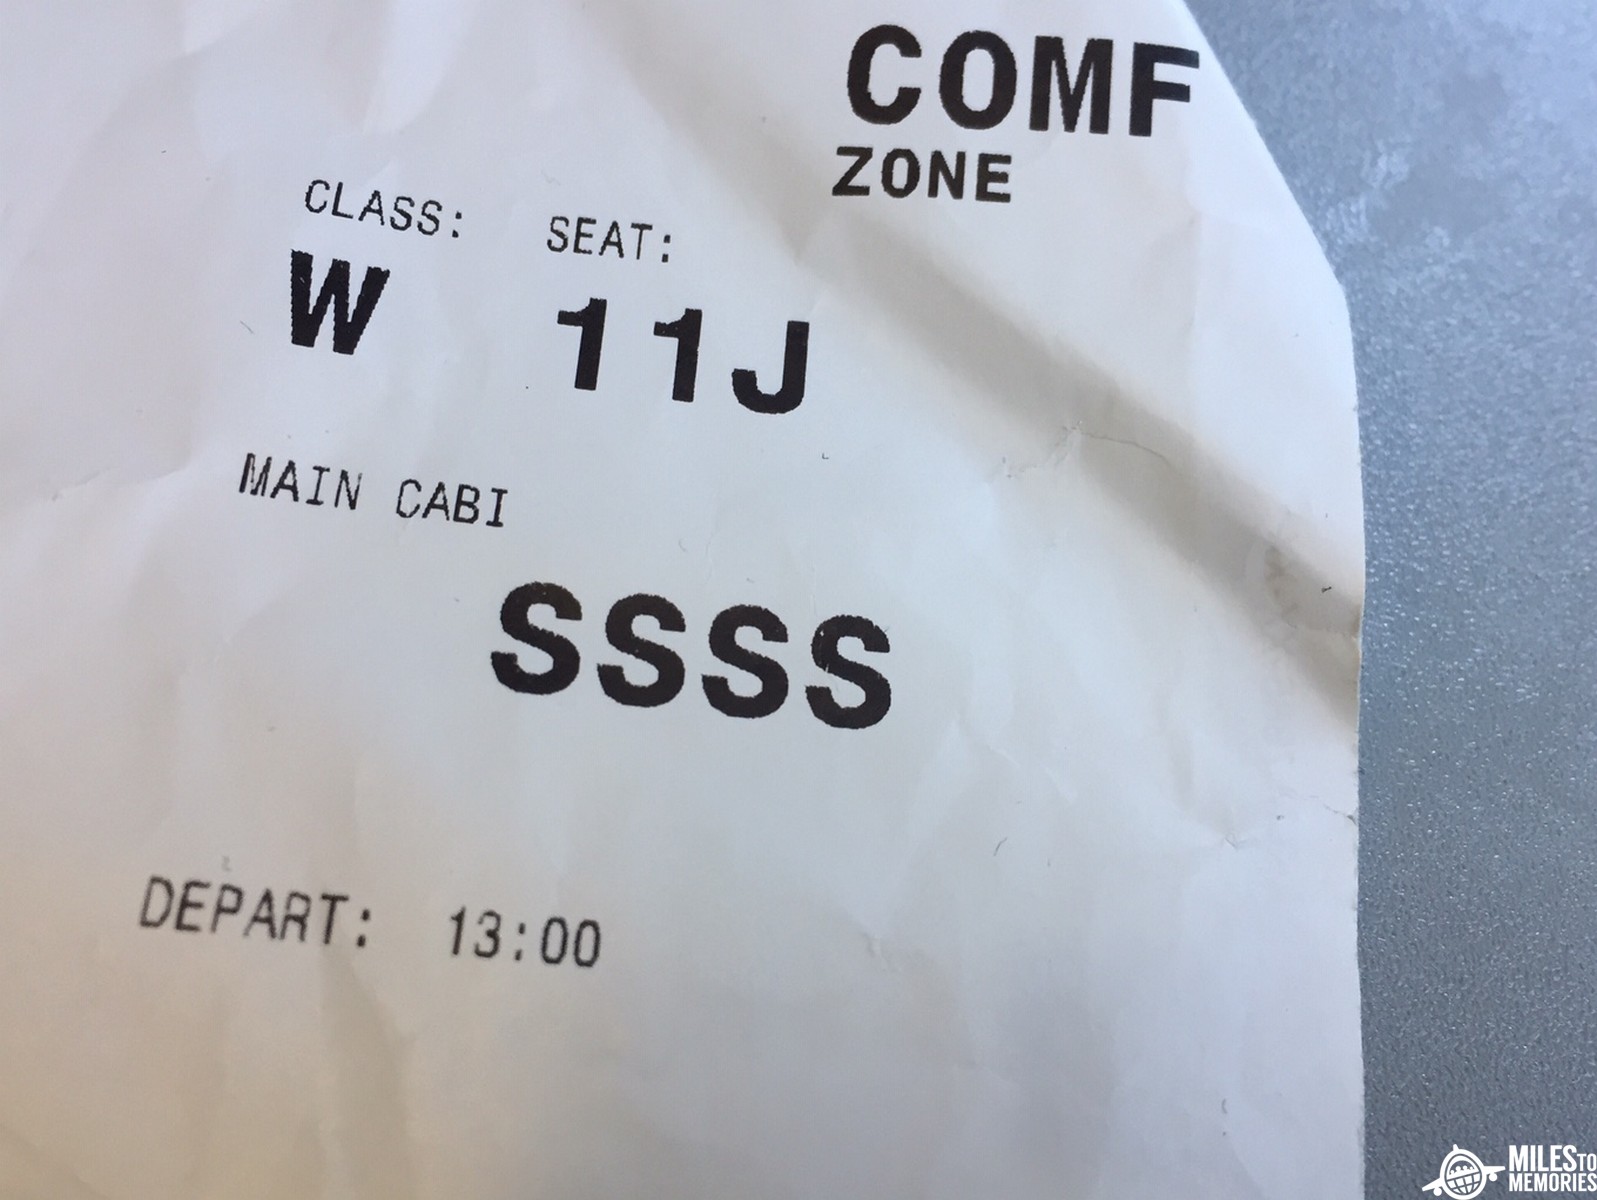 SSSS On My Boarding Pass